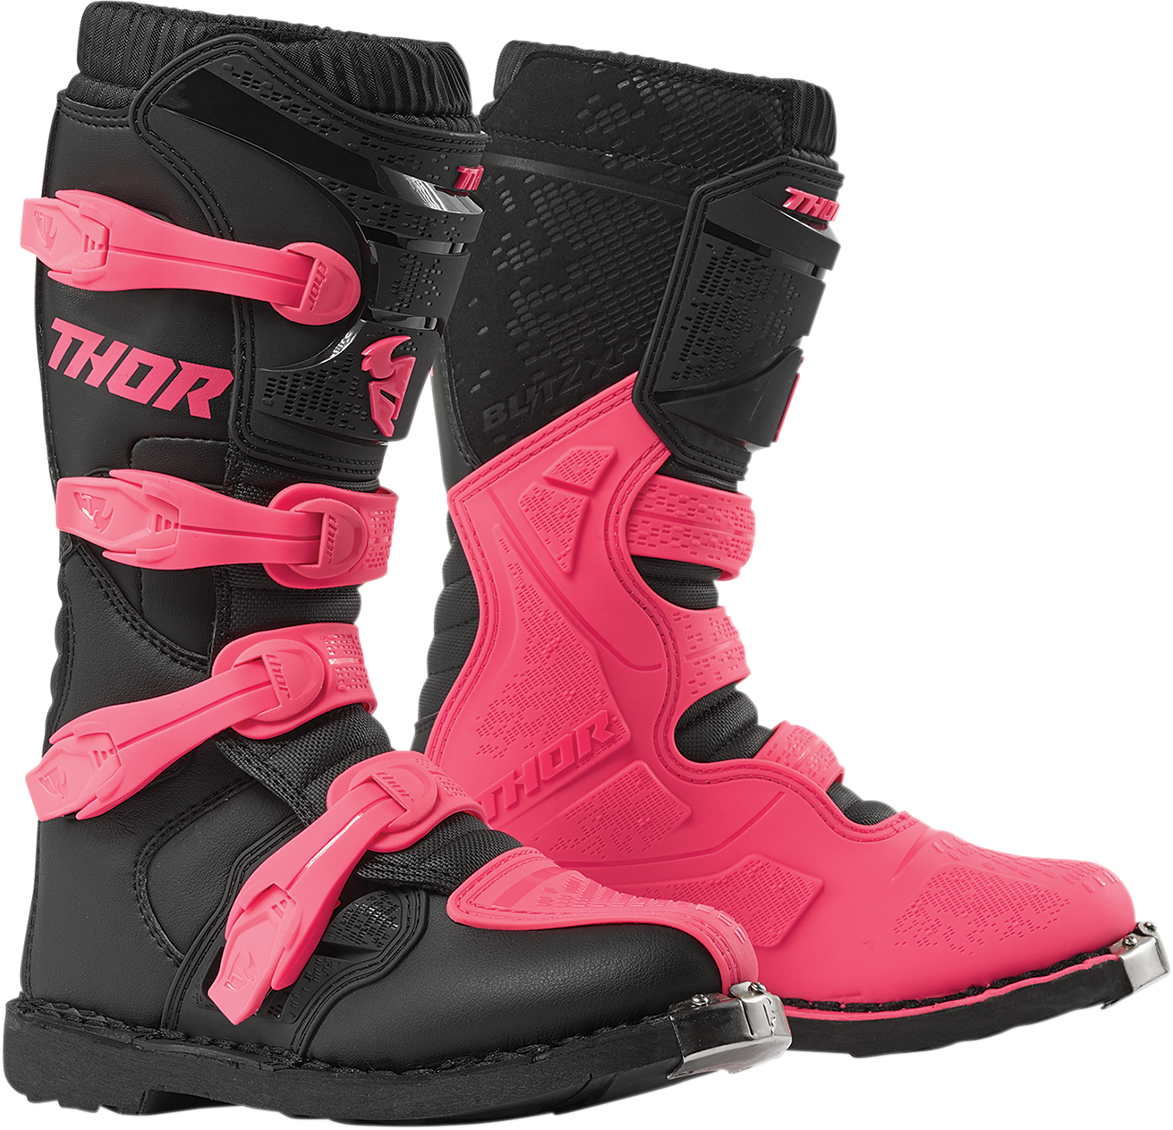 THOR Women's Blitz XP Boots - Black/Pink